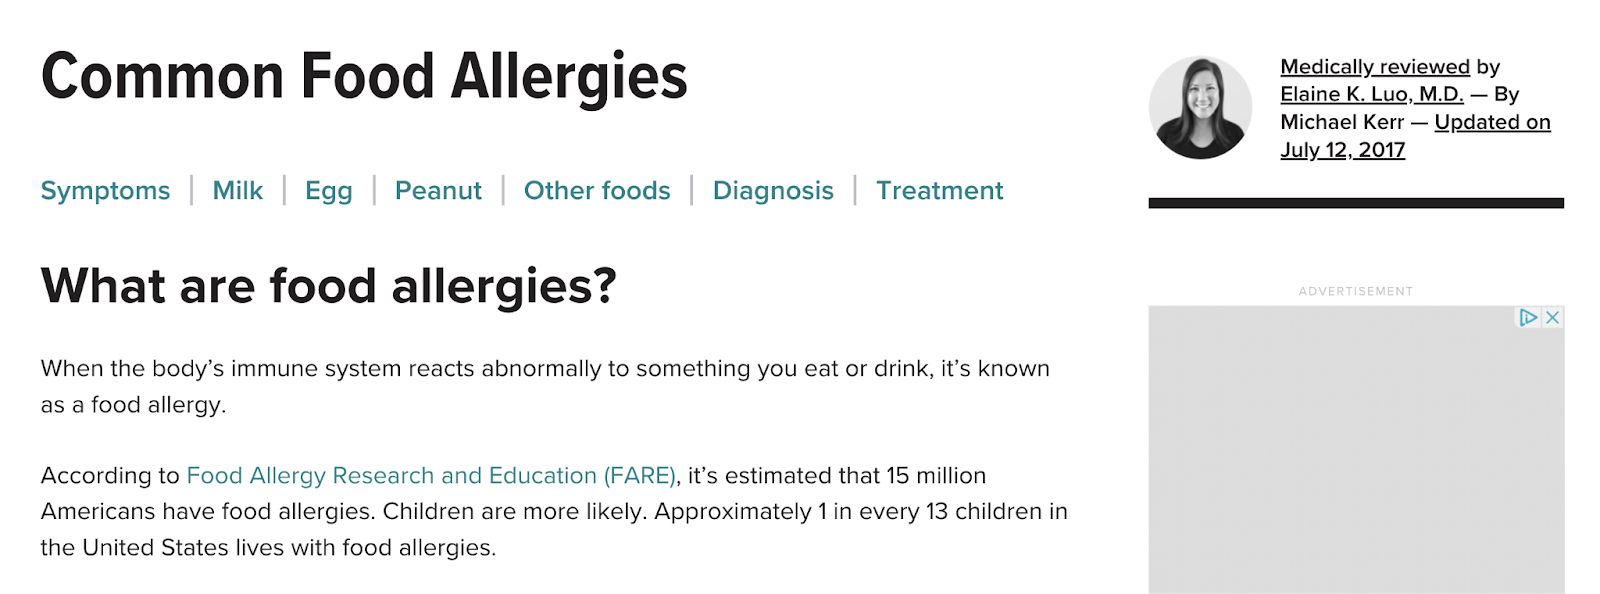  "Common Food Allergies"